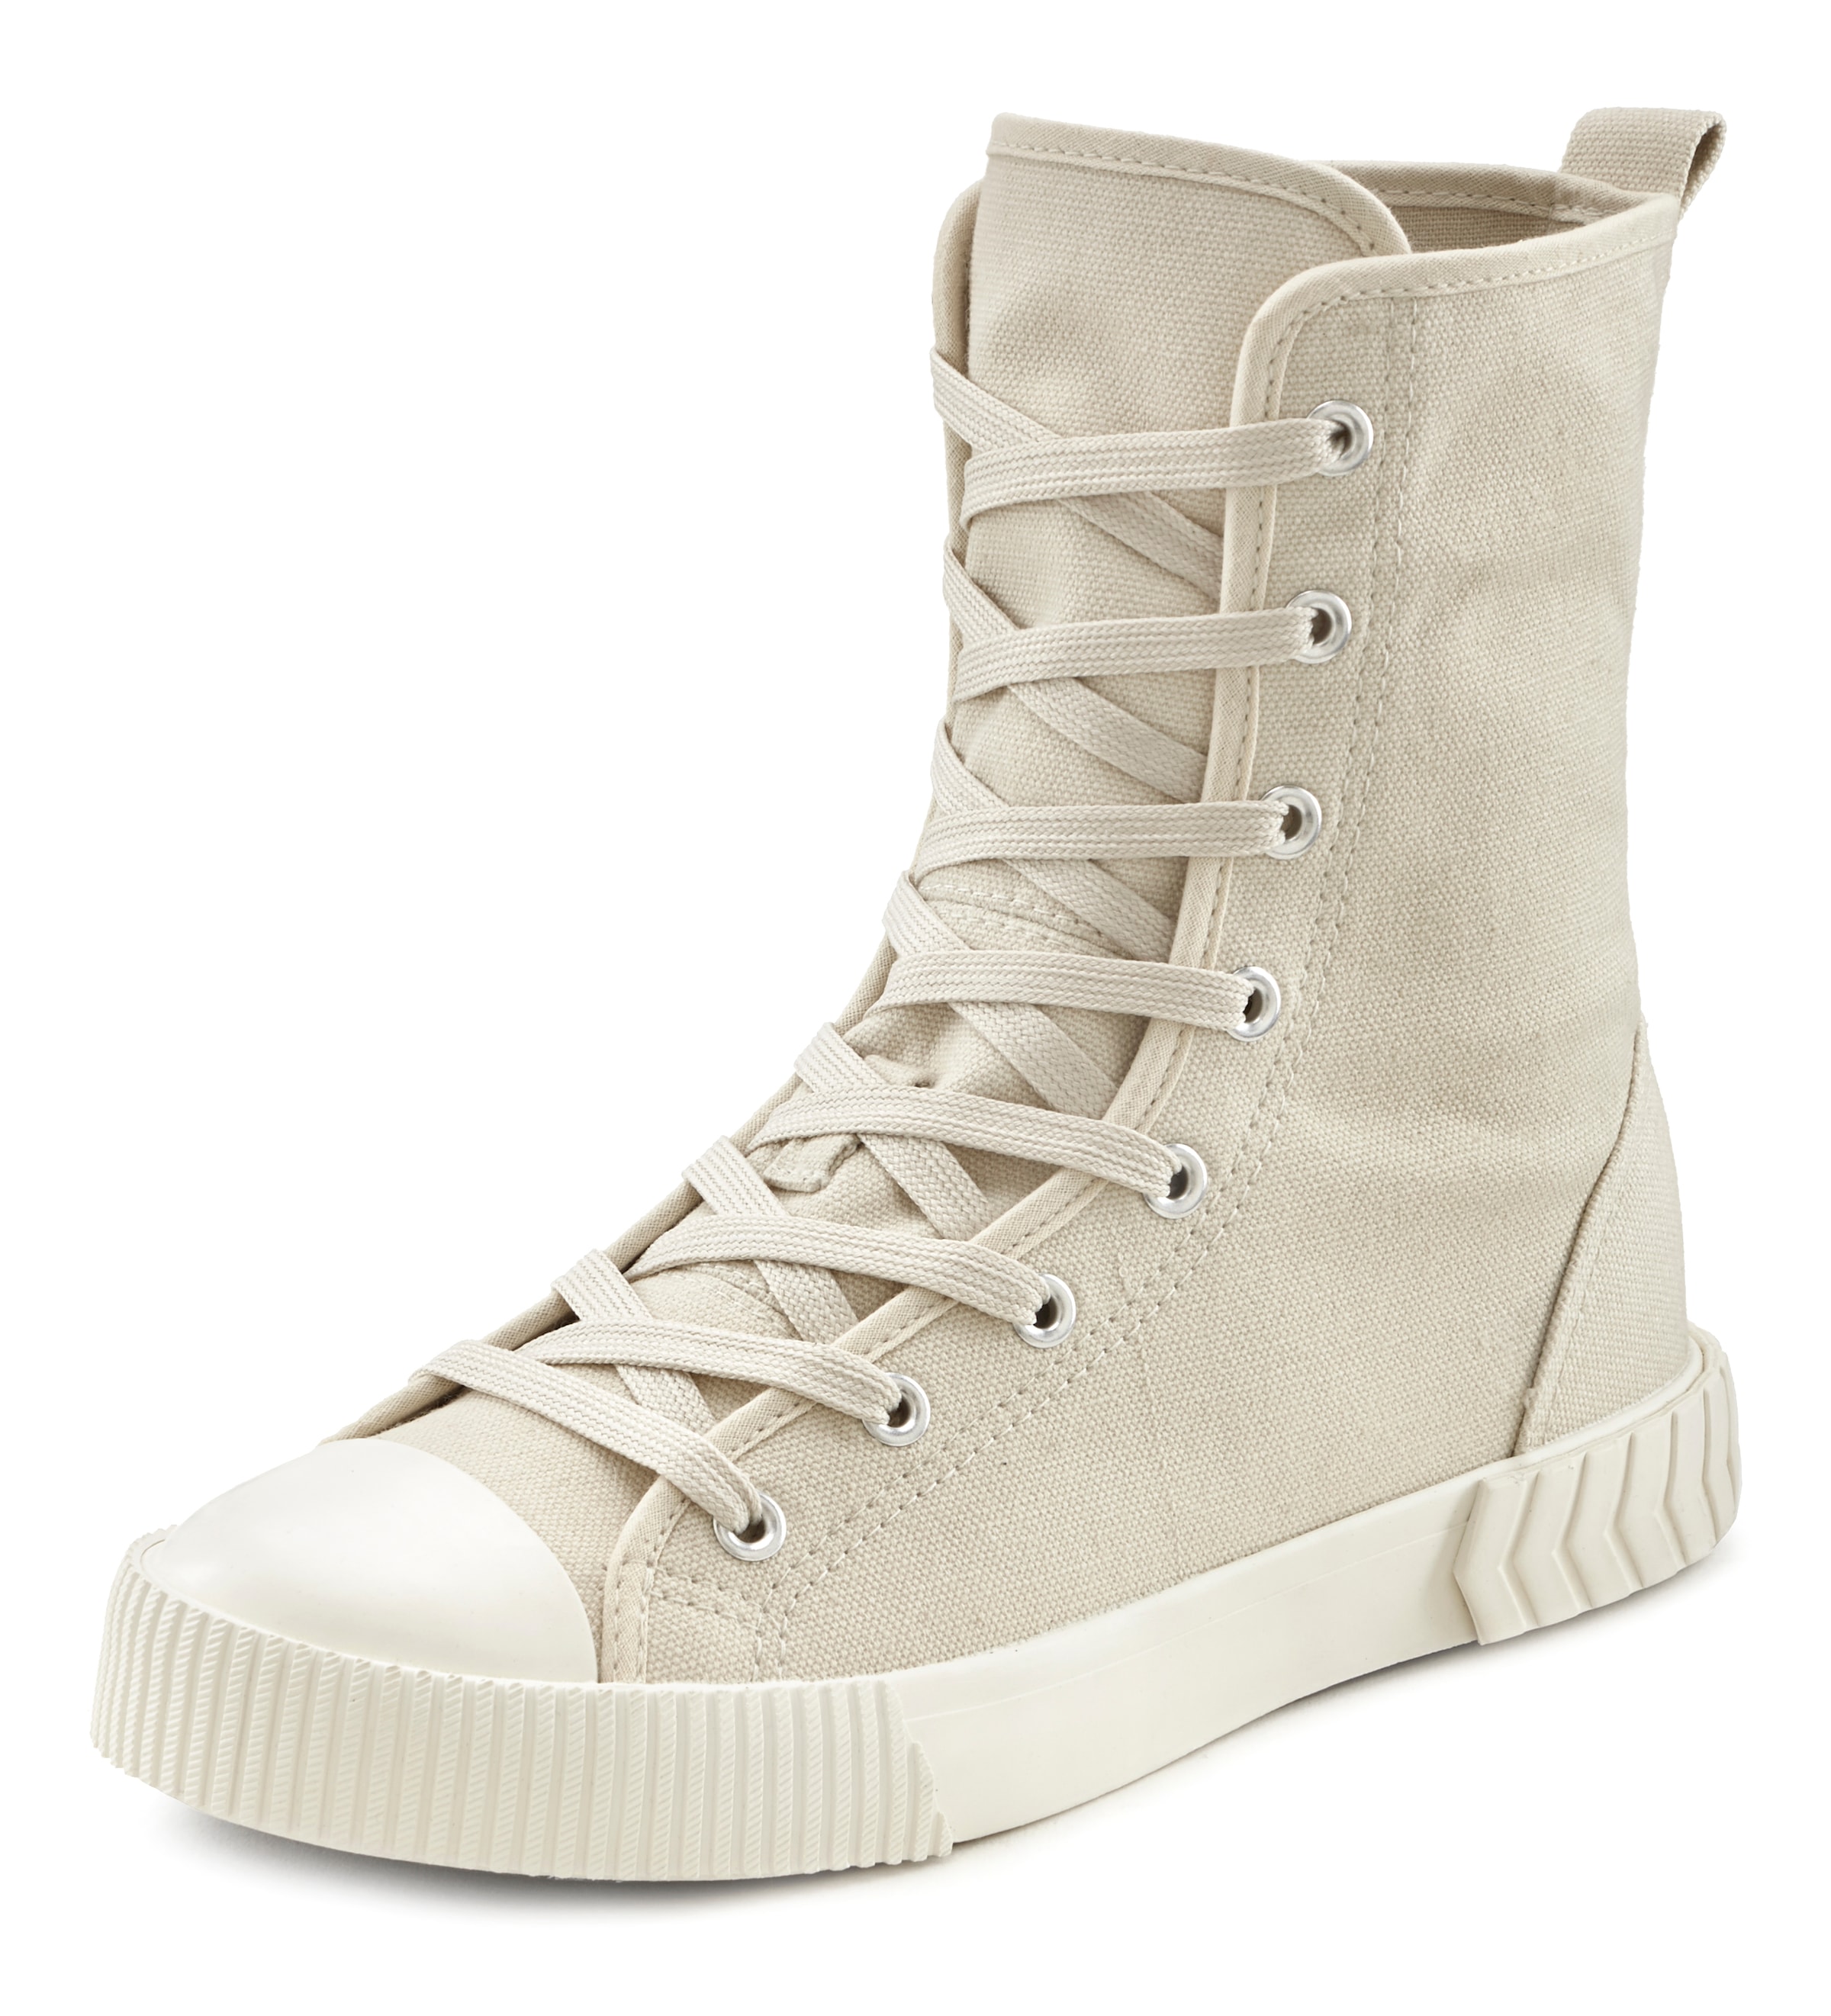 LASCANA Stiefelette, im Combat Look, High Top Sneaker, Schnürschuh, Textil-Boots